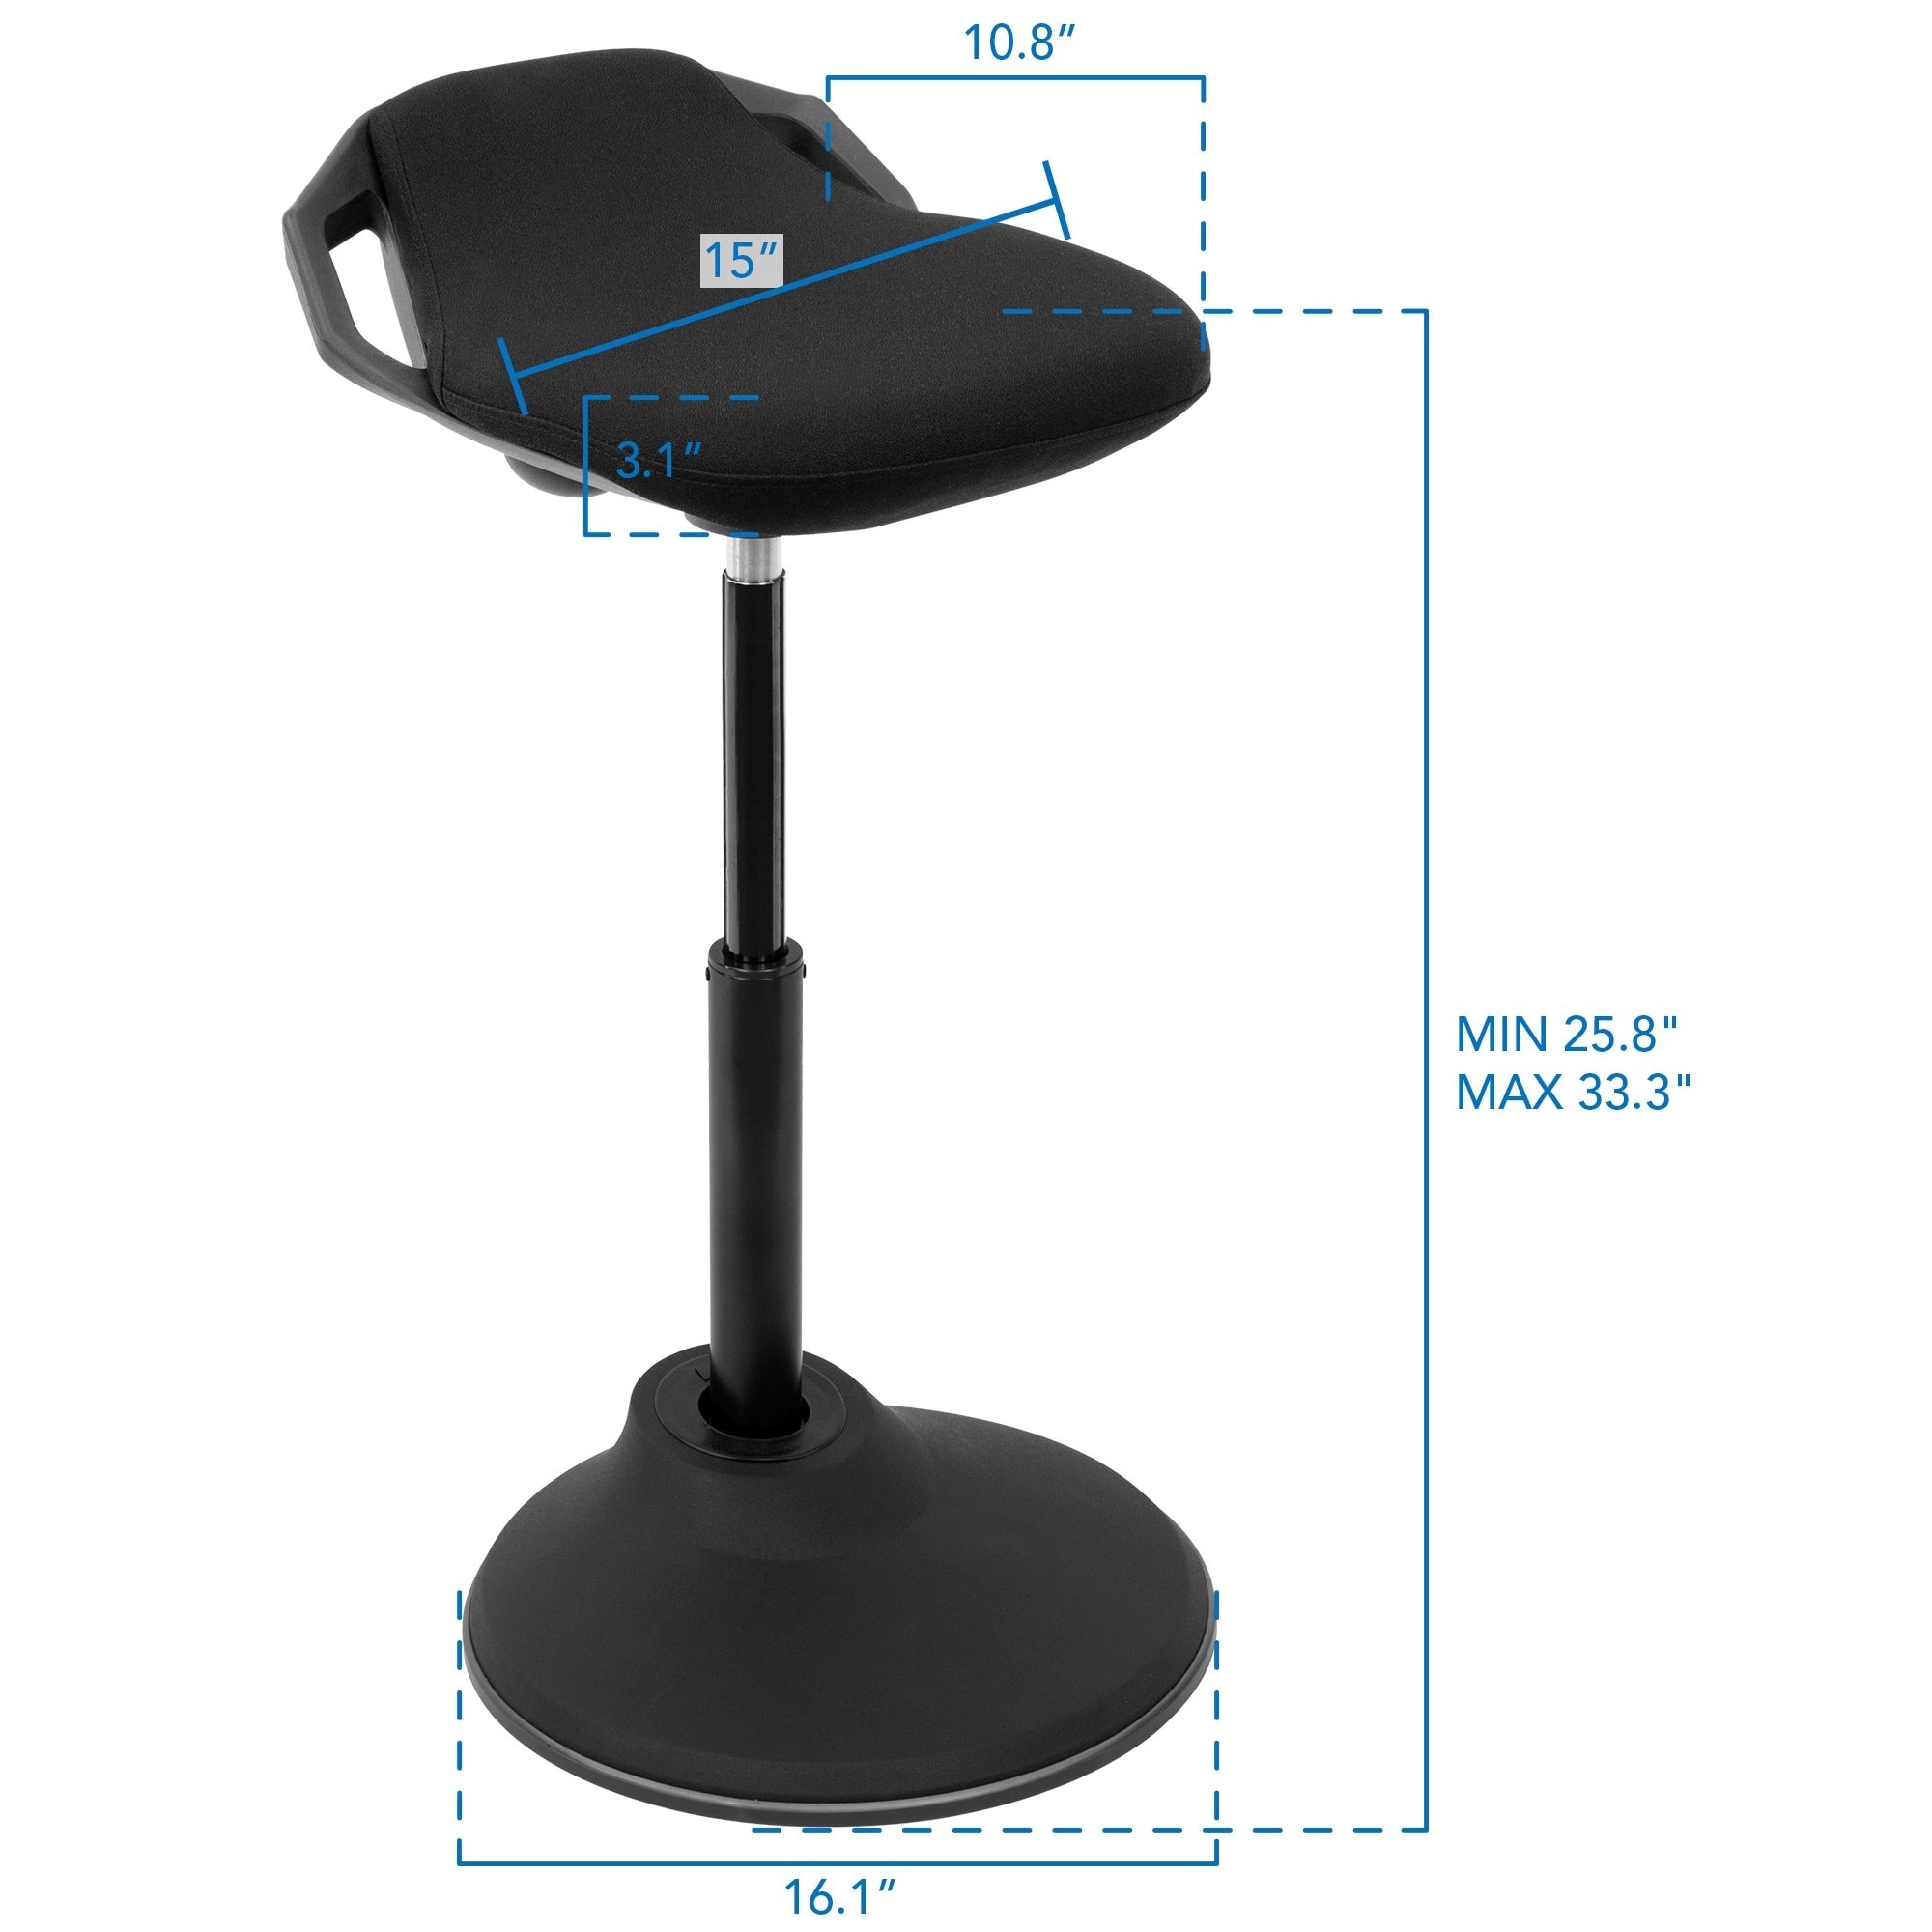 Ergonomic Height Adjustable 360° Rotating Foot Stool with Wheels